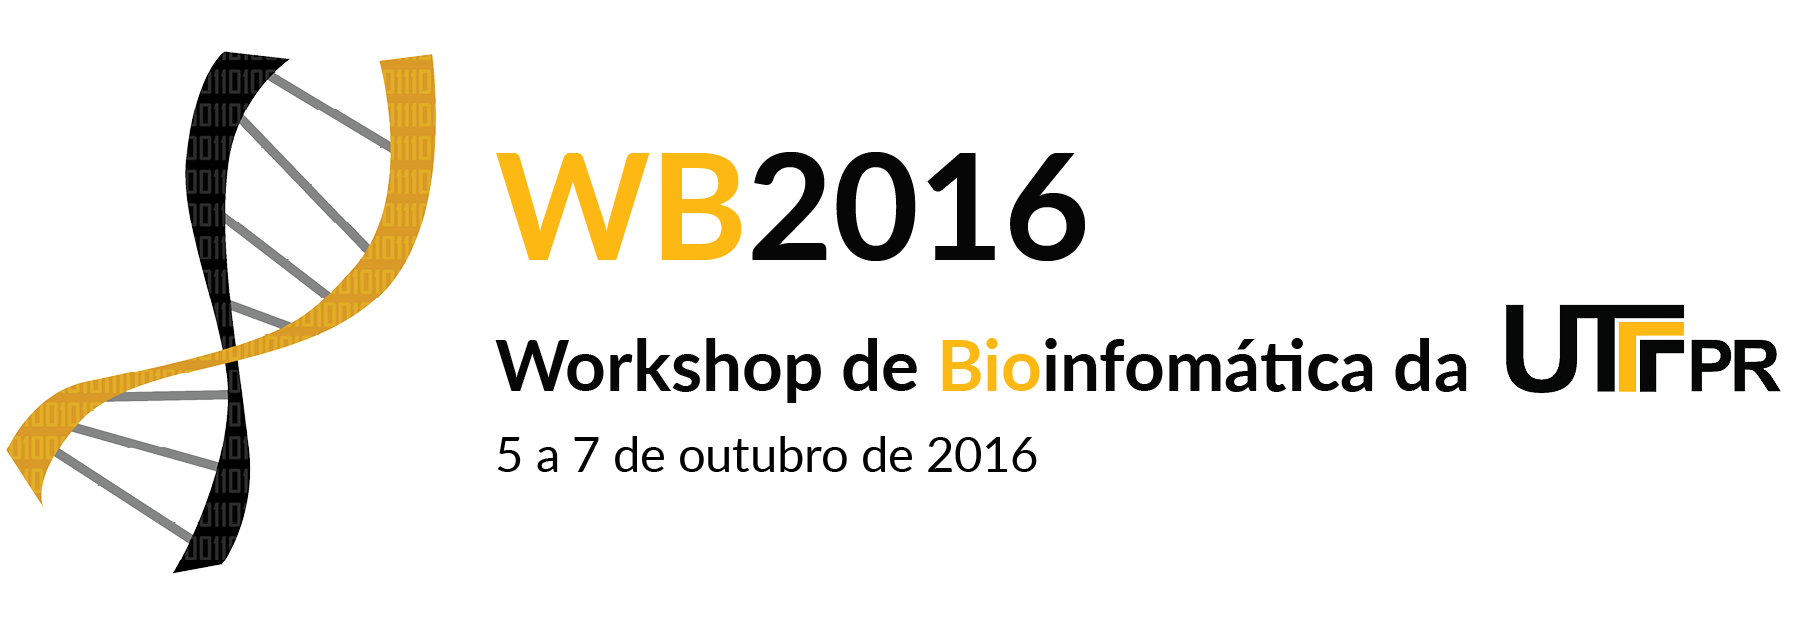 Logotipo Workshop de Bioinformática UTFPR